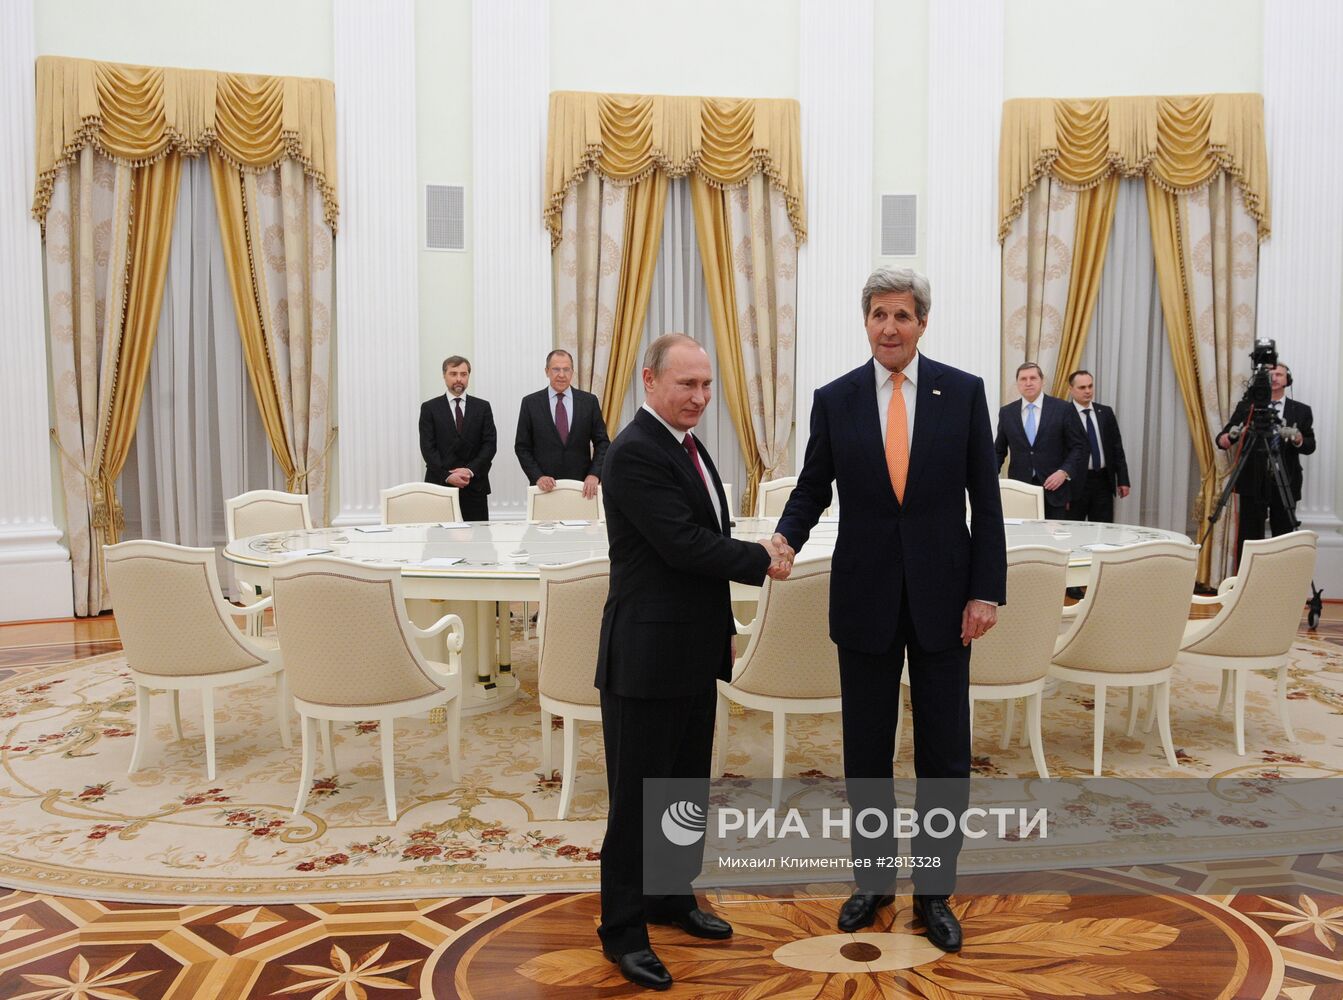 Встреча президента РФ В. Путина с государственным секретарем США Дж.Керри